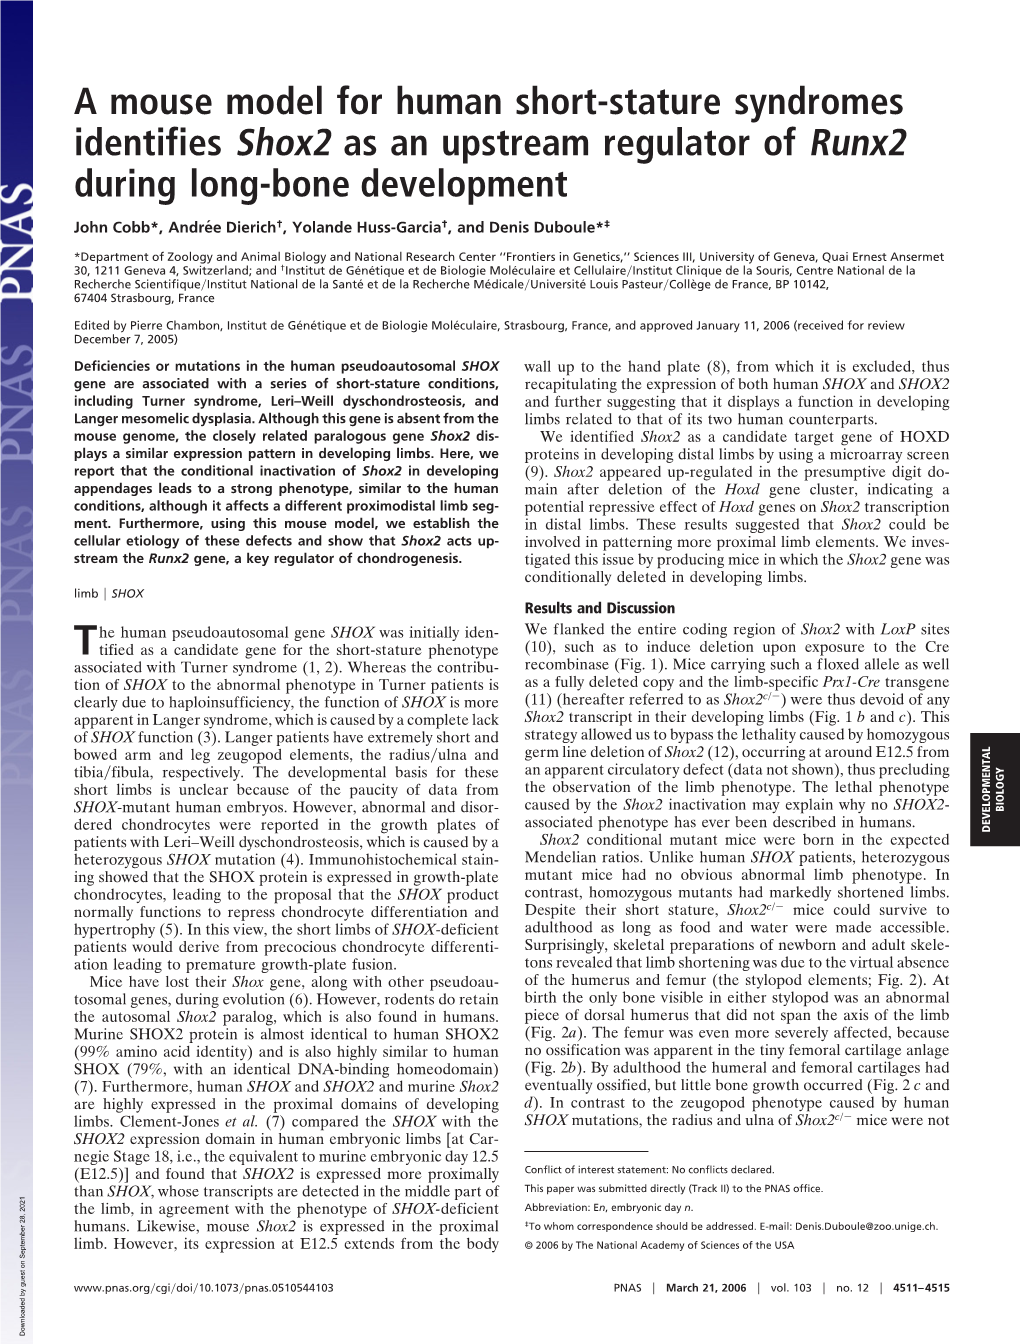 A Mouse Model for Human Short-Stature Syndromes Identifies Shox2 As an Upstream Regulator of Runx2 During Long-Bone Development